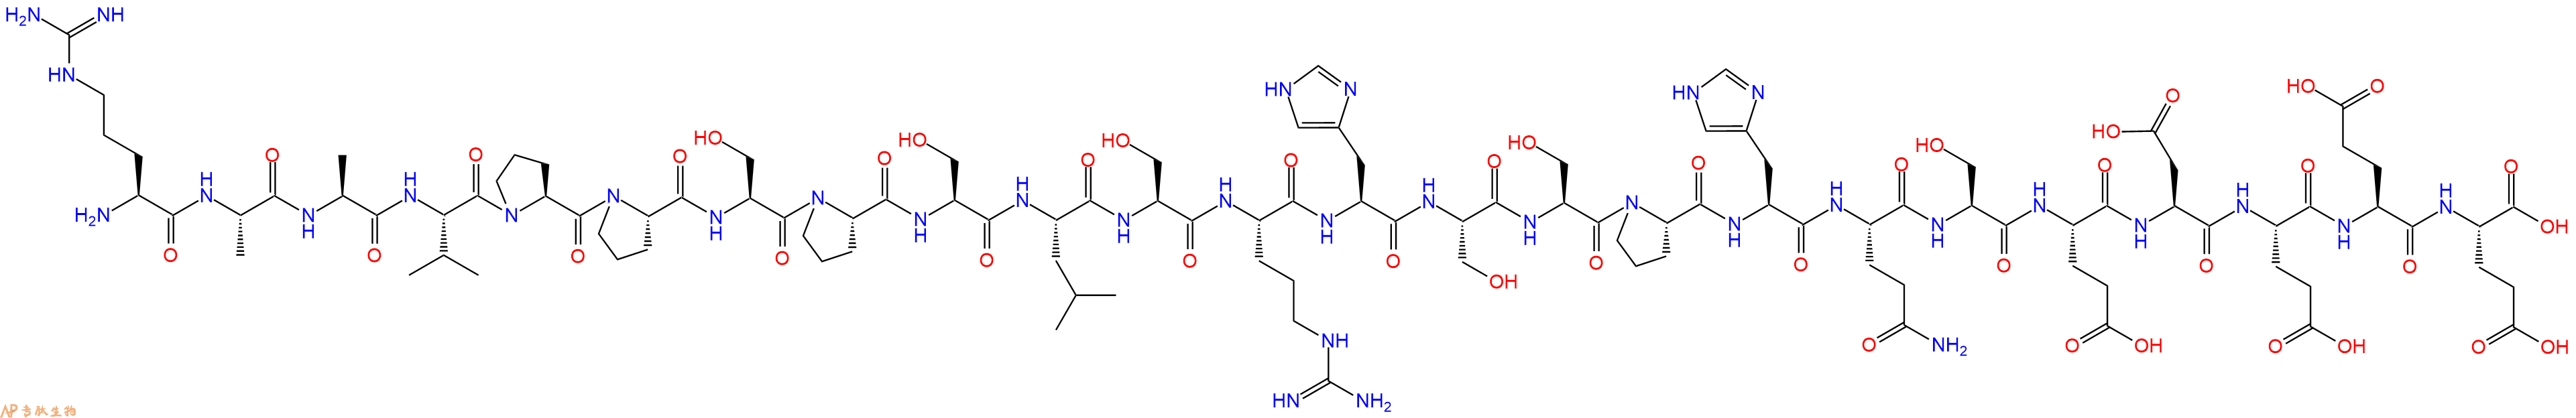 专肽生物产品GSK3 Substrate, α, β subunit